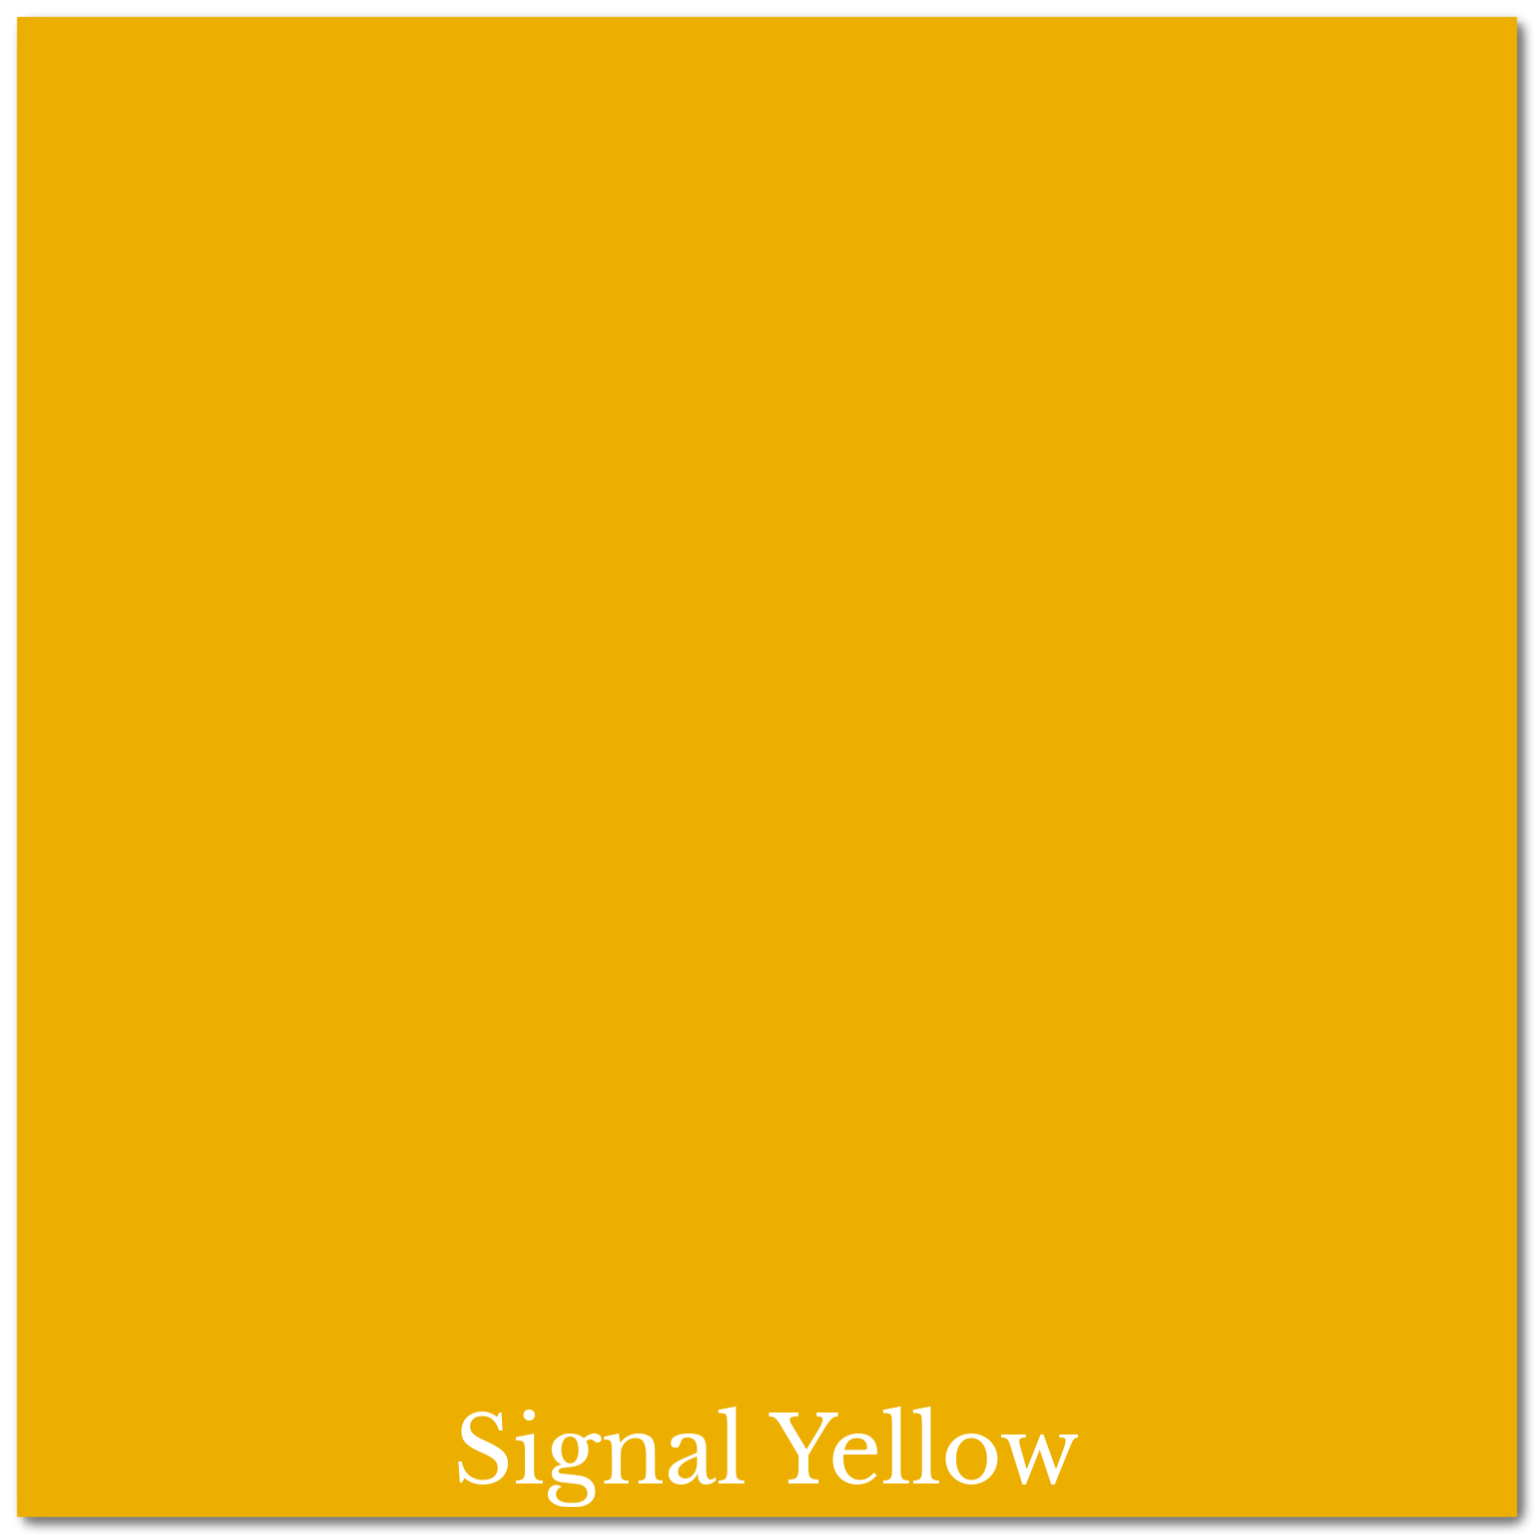 12x12 Oracal 651 Adhesive Vinyl - Signal Yellow